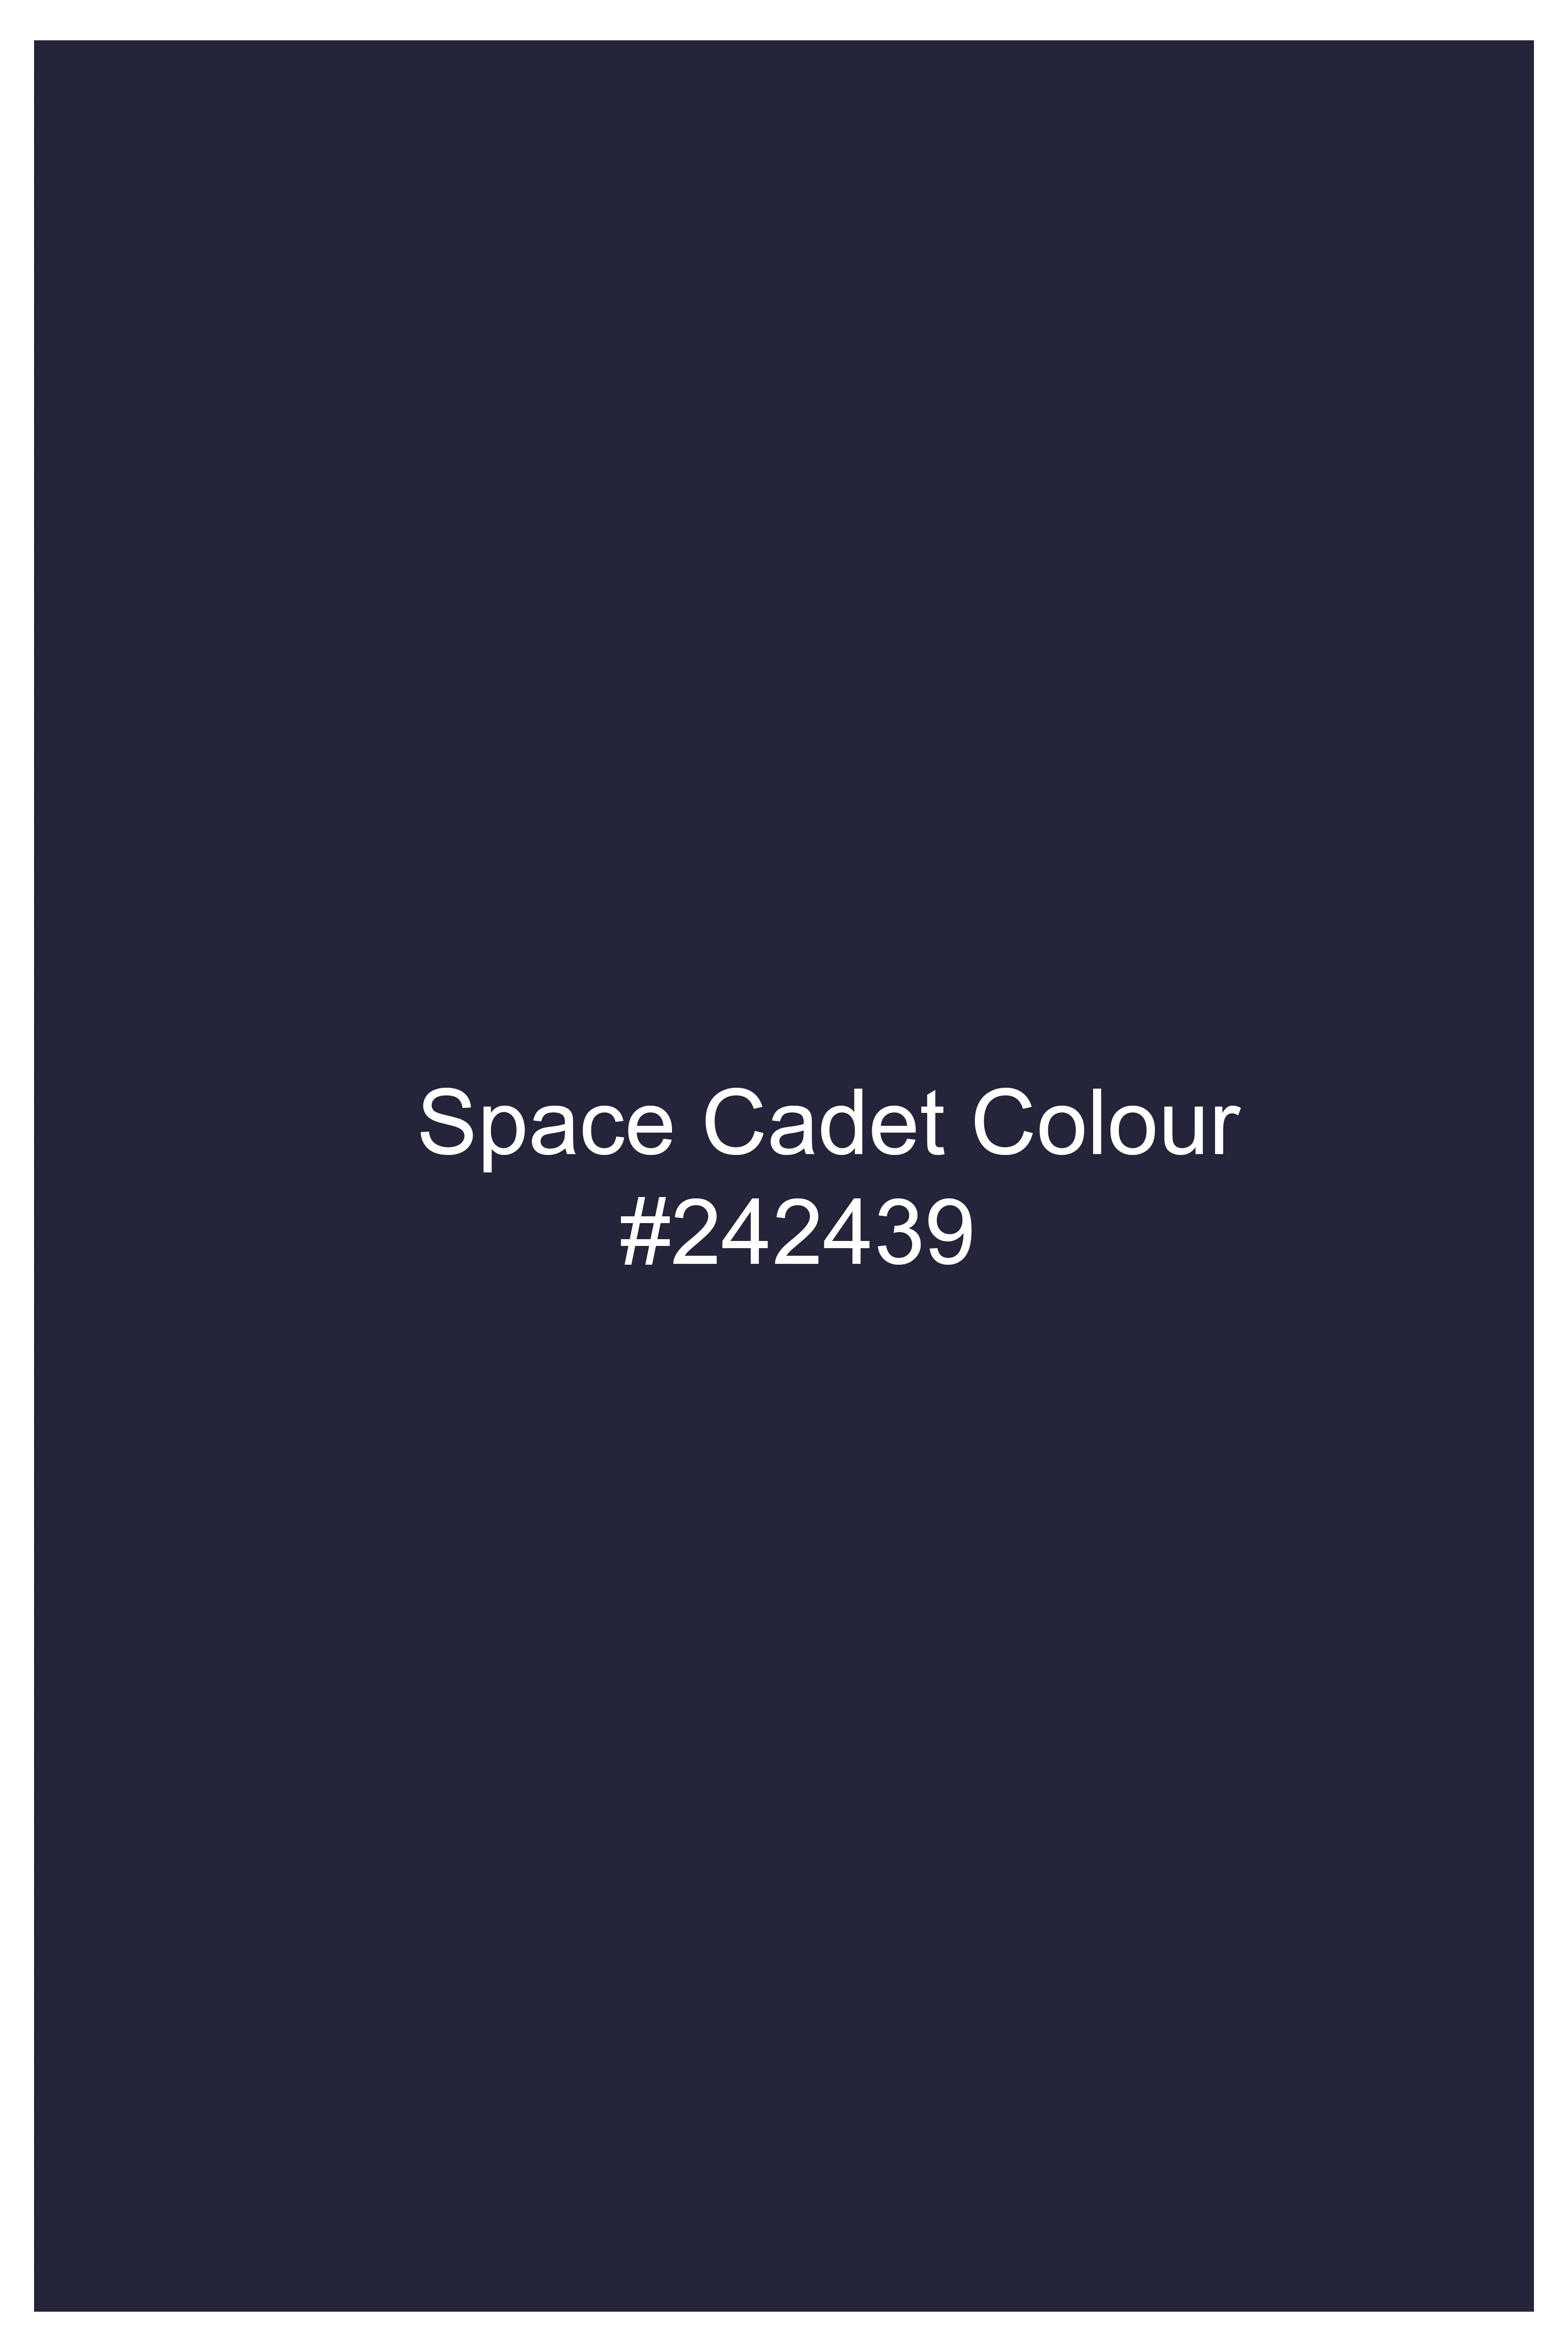 Space Cadet Blue Wool Rich Bandhgala Designer Suit ST3013-BG-D41-36, ST3013-BG-D41-38, ST3013-BG-D41-40, ST3013-BG-D41-42, ST3013-BG-D41-44, ST3013-BG-D41-46, ST3013-BG-D41-48, ST3013-BG-D41-50, ST3013-BG-D41-52, ST3013-BG-D41-54, ST3013-BG-D41-56, ST3013-BG-D41-58, ST3013-BG-D41-60